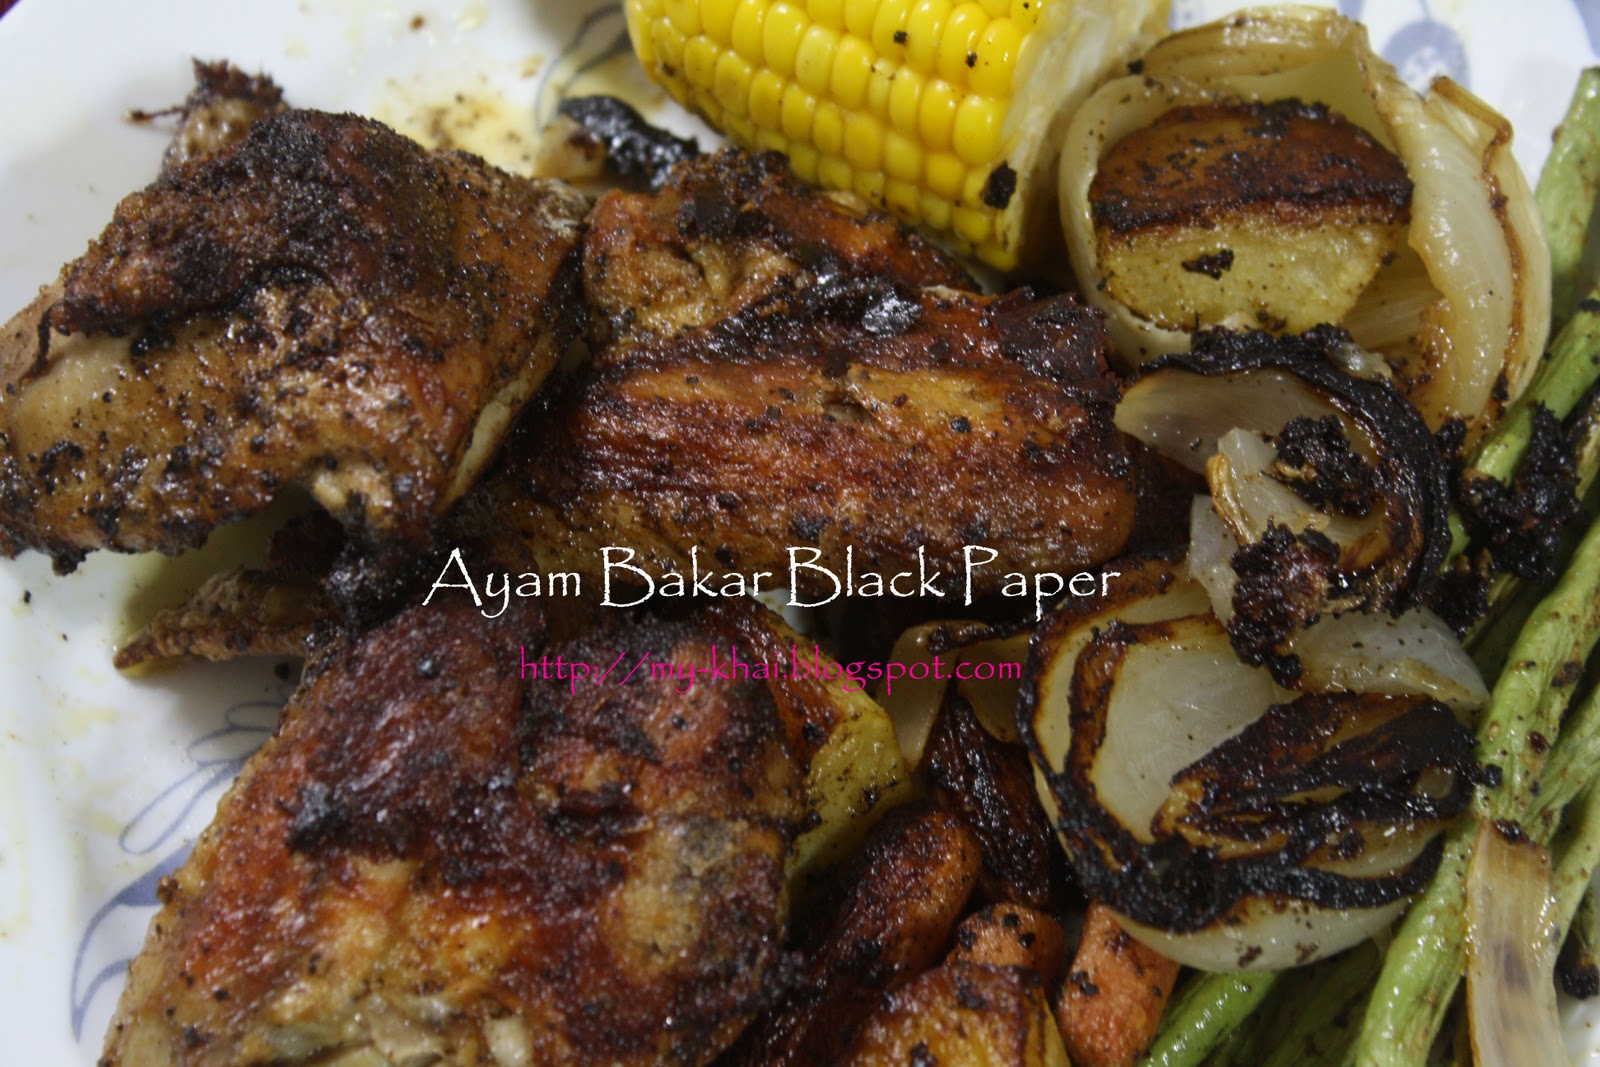 my colorful jurney: Ayam Bakar Black Paper